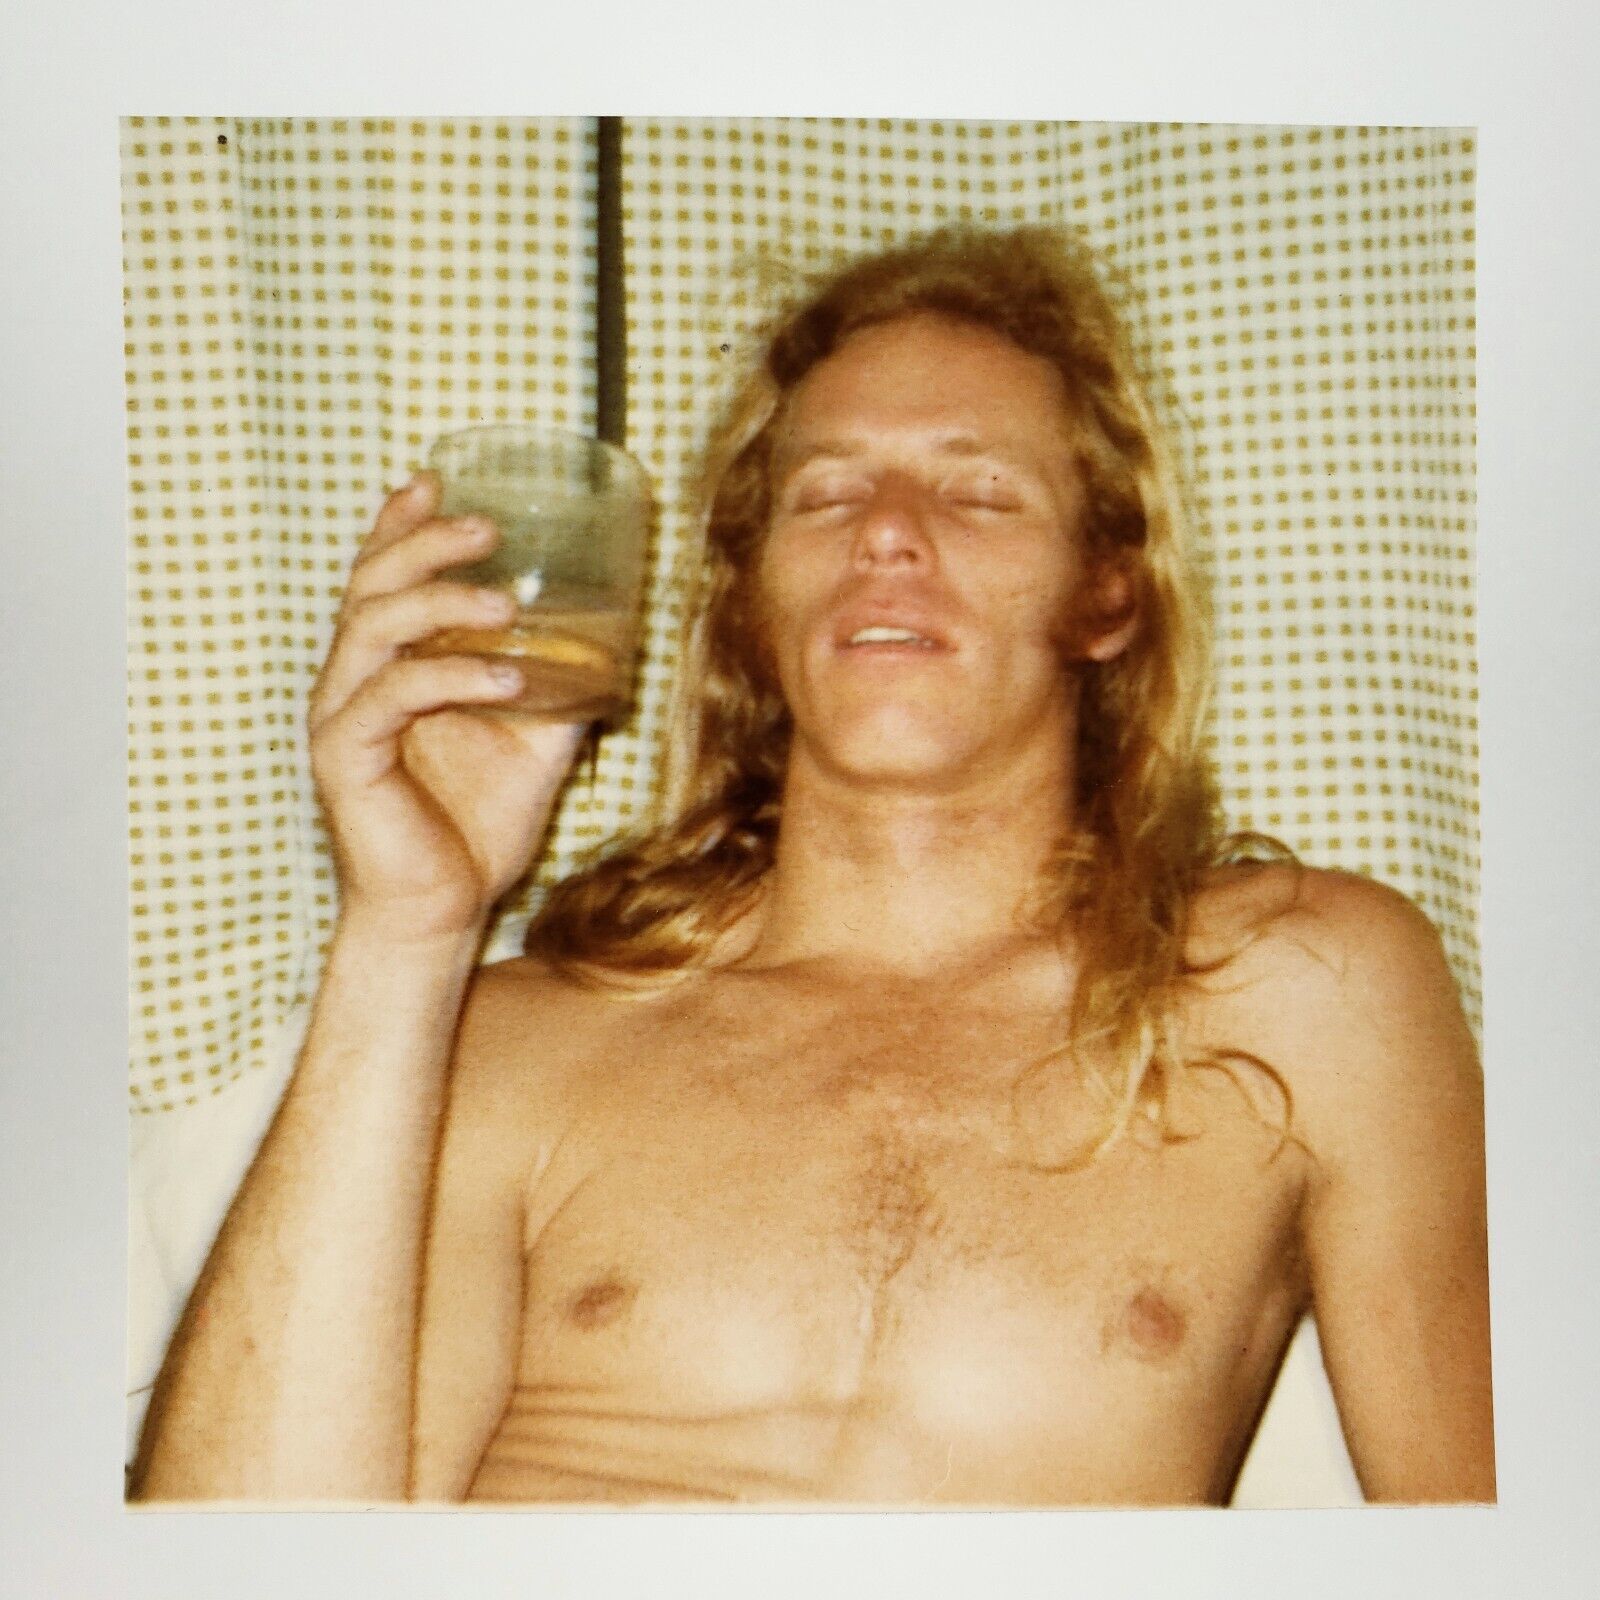 Shirtless Man Enjoying Drink Photo 1980s Long-Haired Hippy Retro Party Guy H808